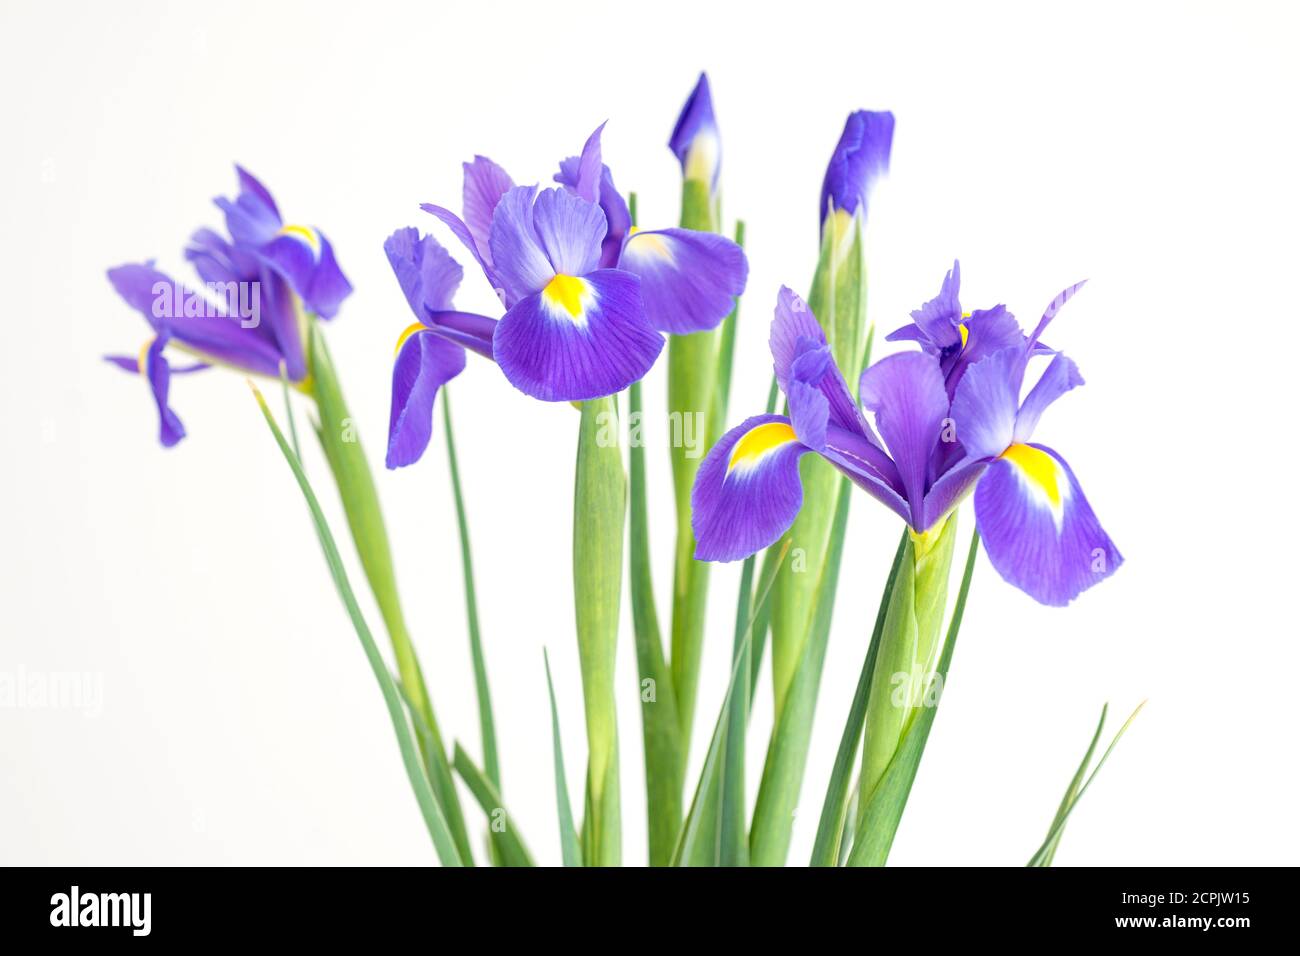 Flower of purple irises on a white background Stock Photo